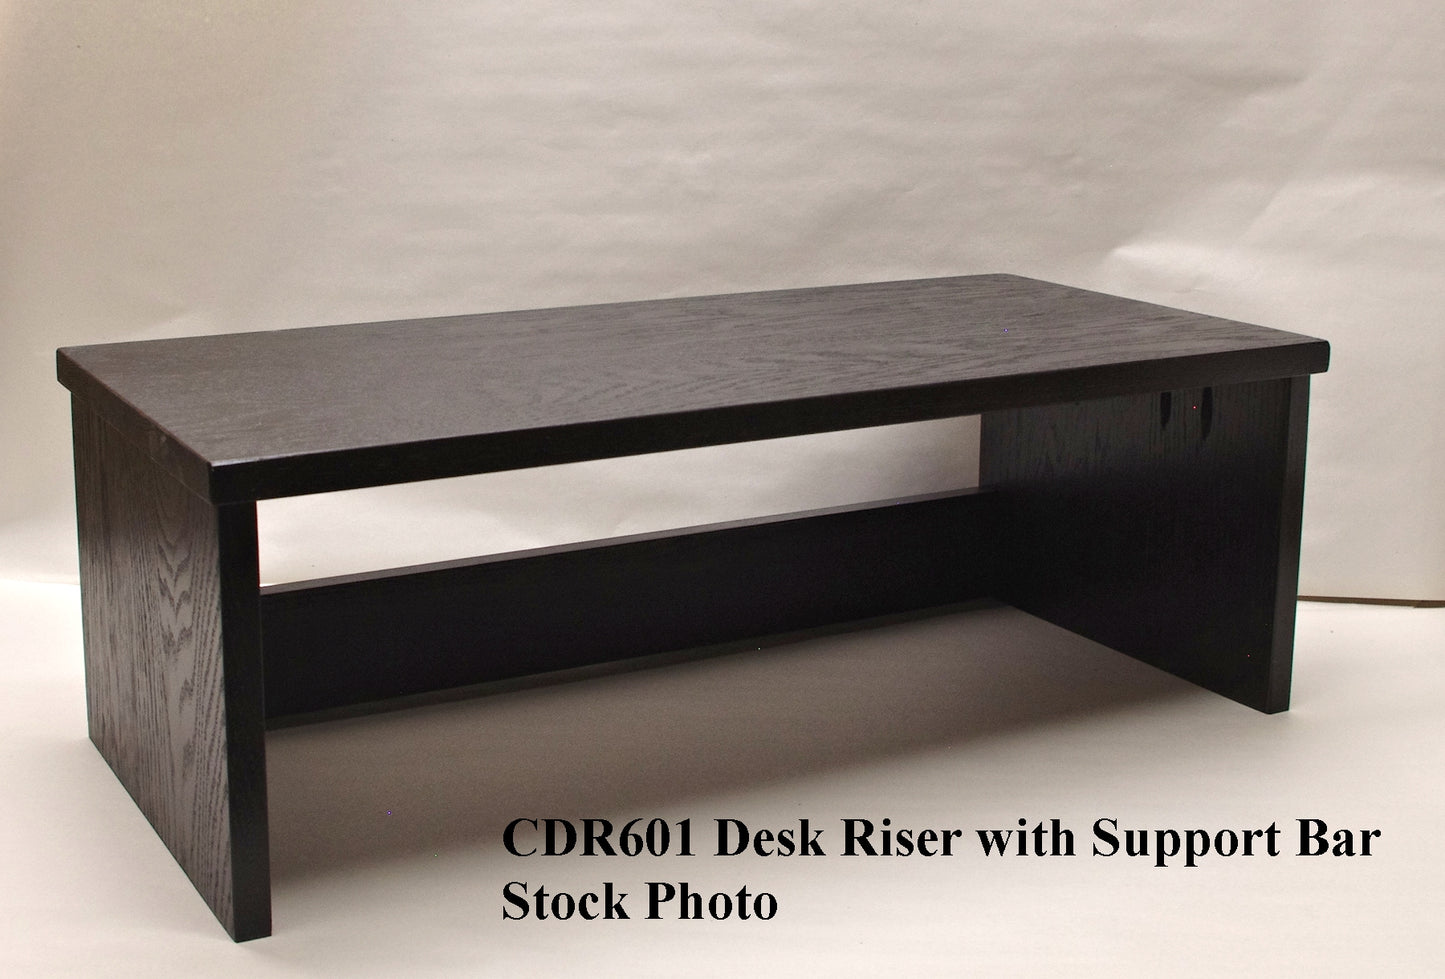 CDR601 Desk Riser with Support Bar - 36" Length